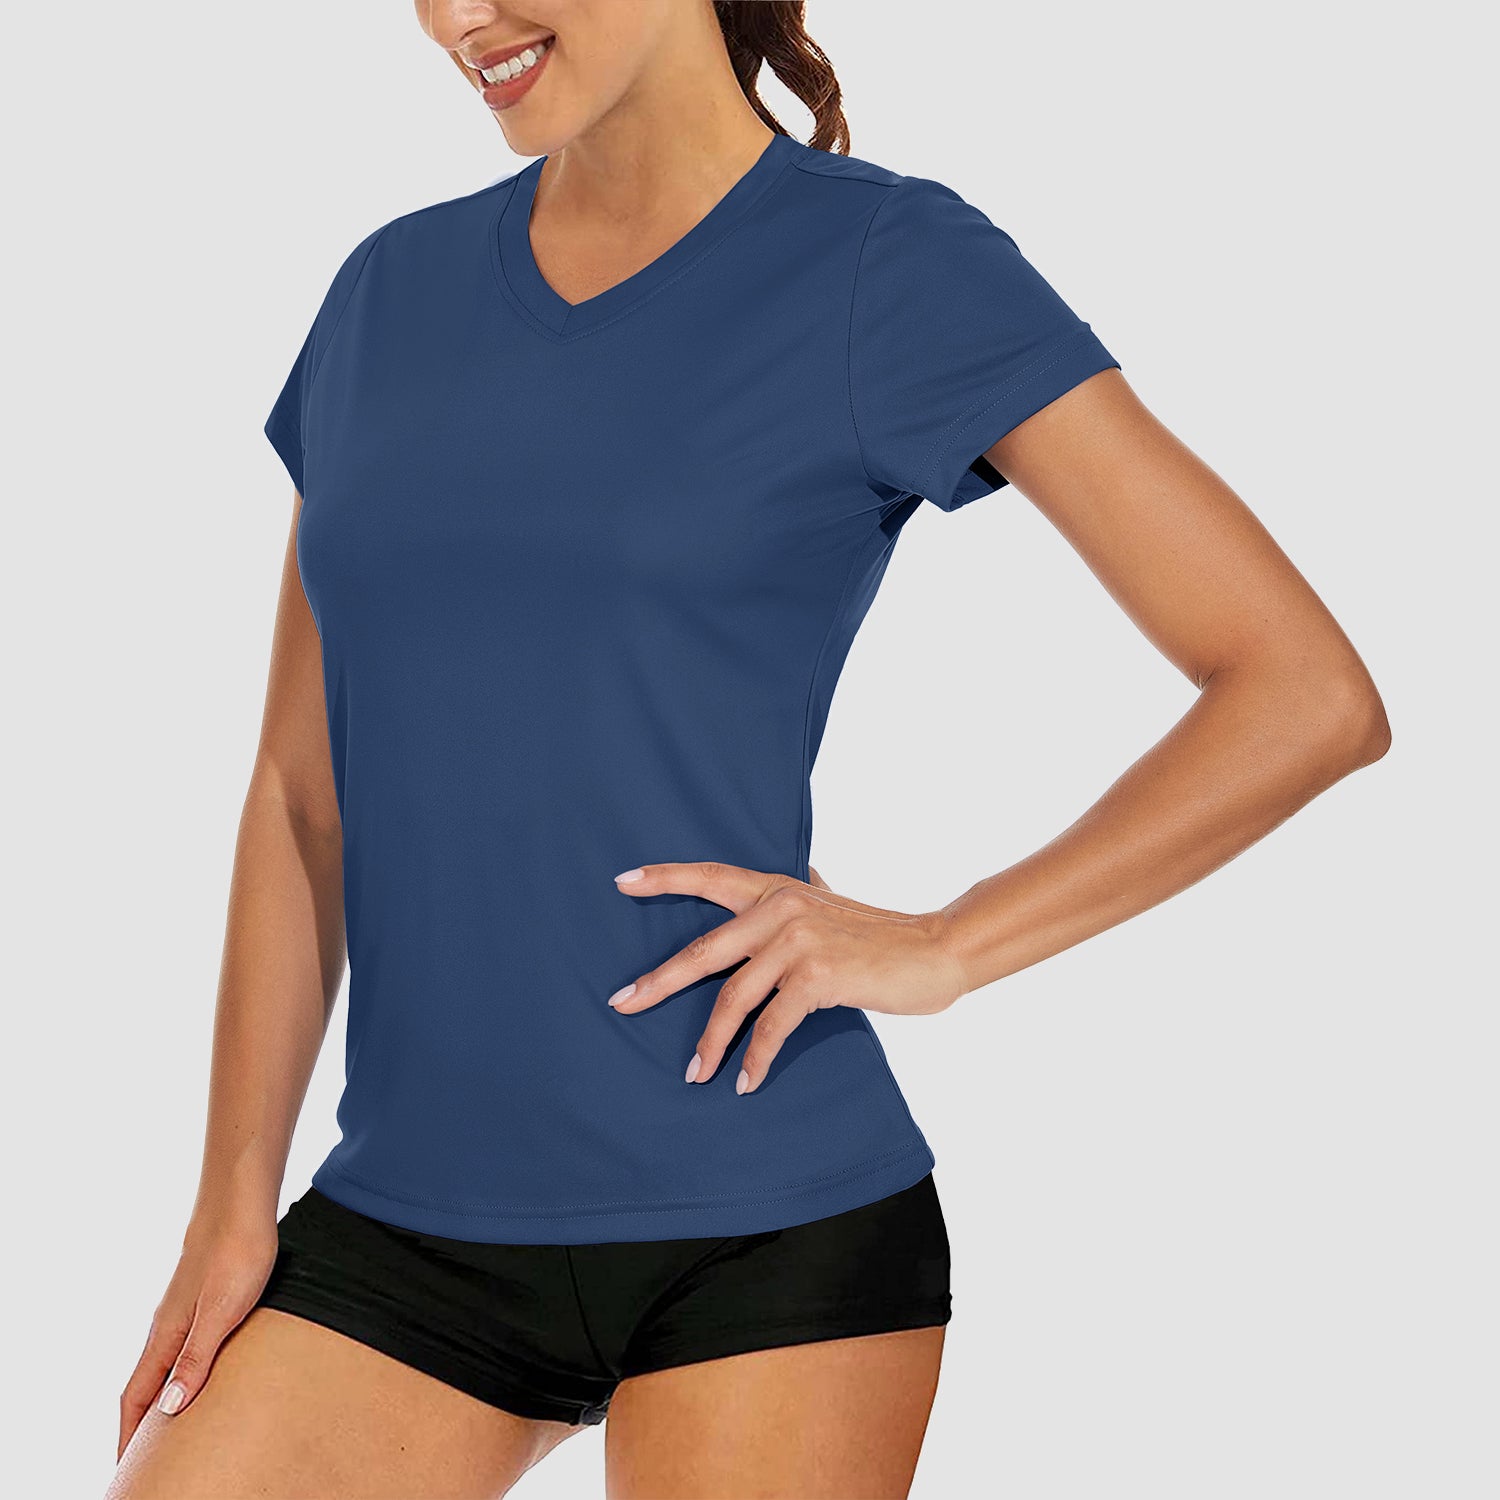 Women's Workout T-Shirt Quick Dry Short-Sleeve Exercise Shirt